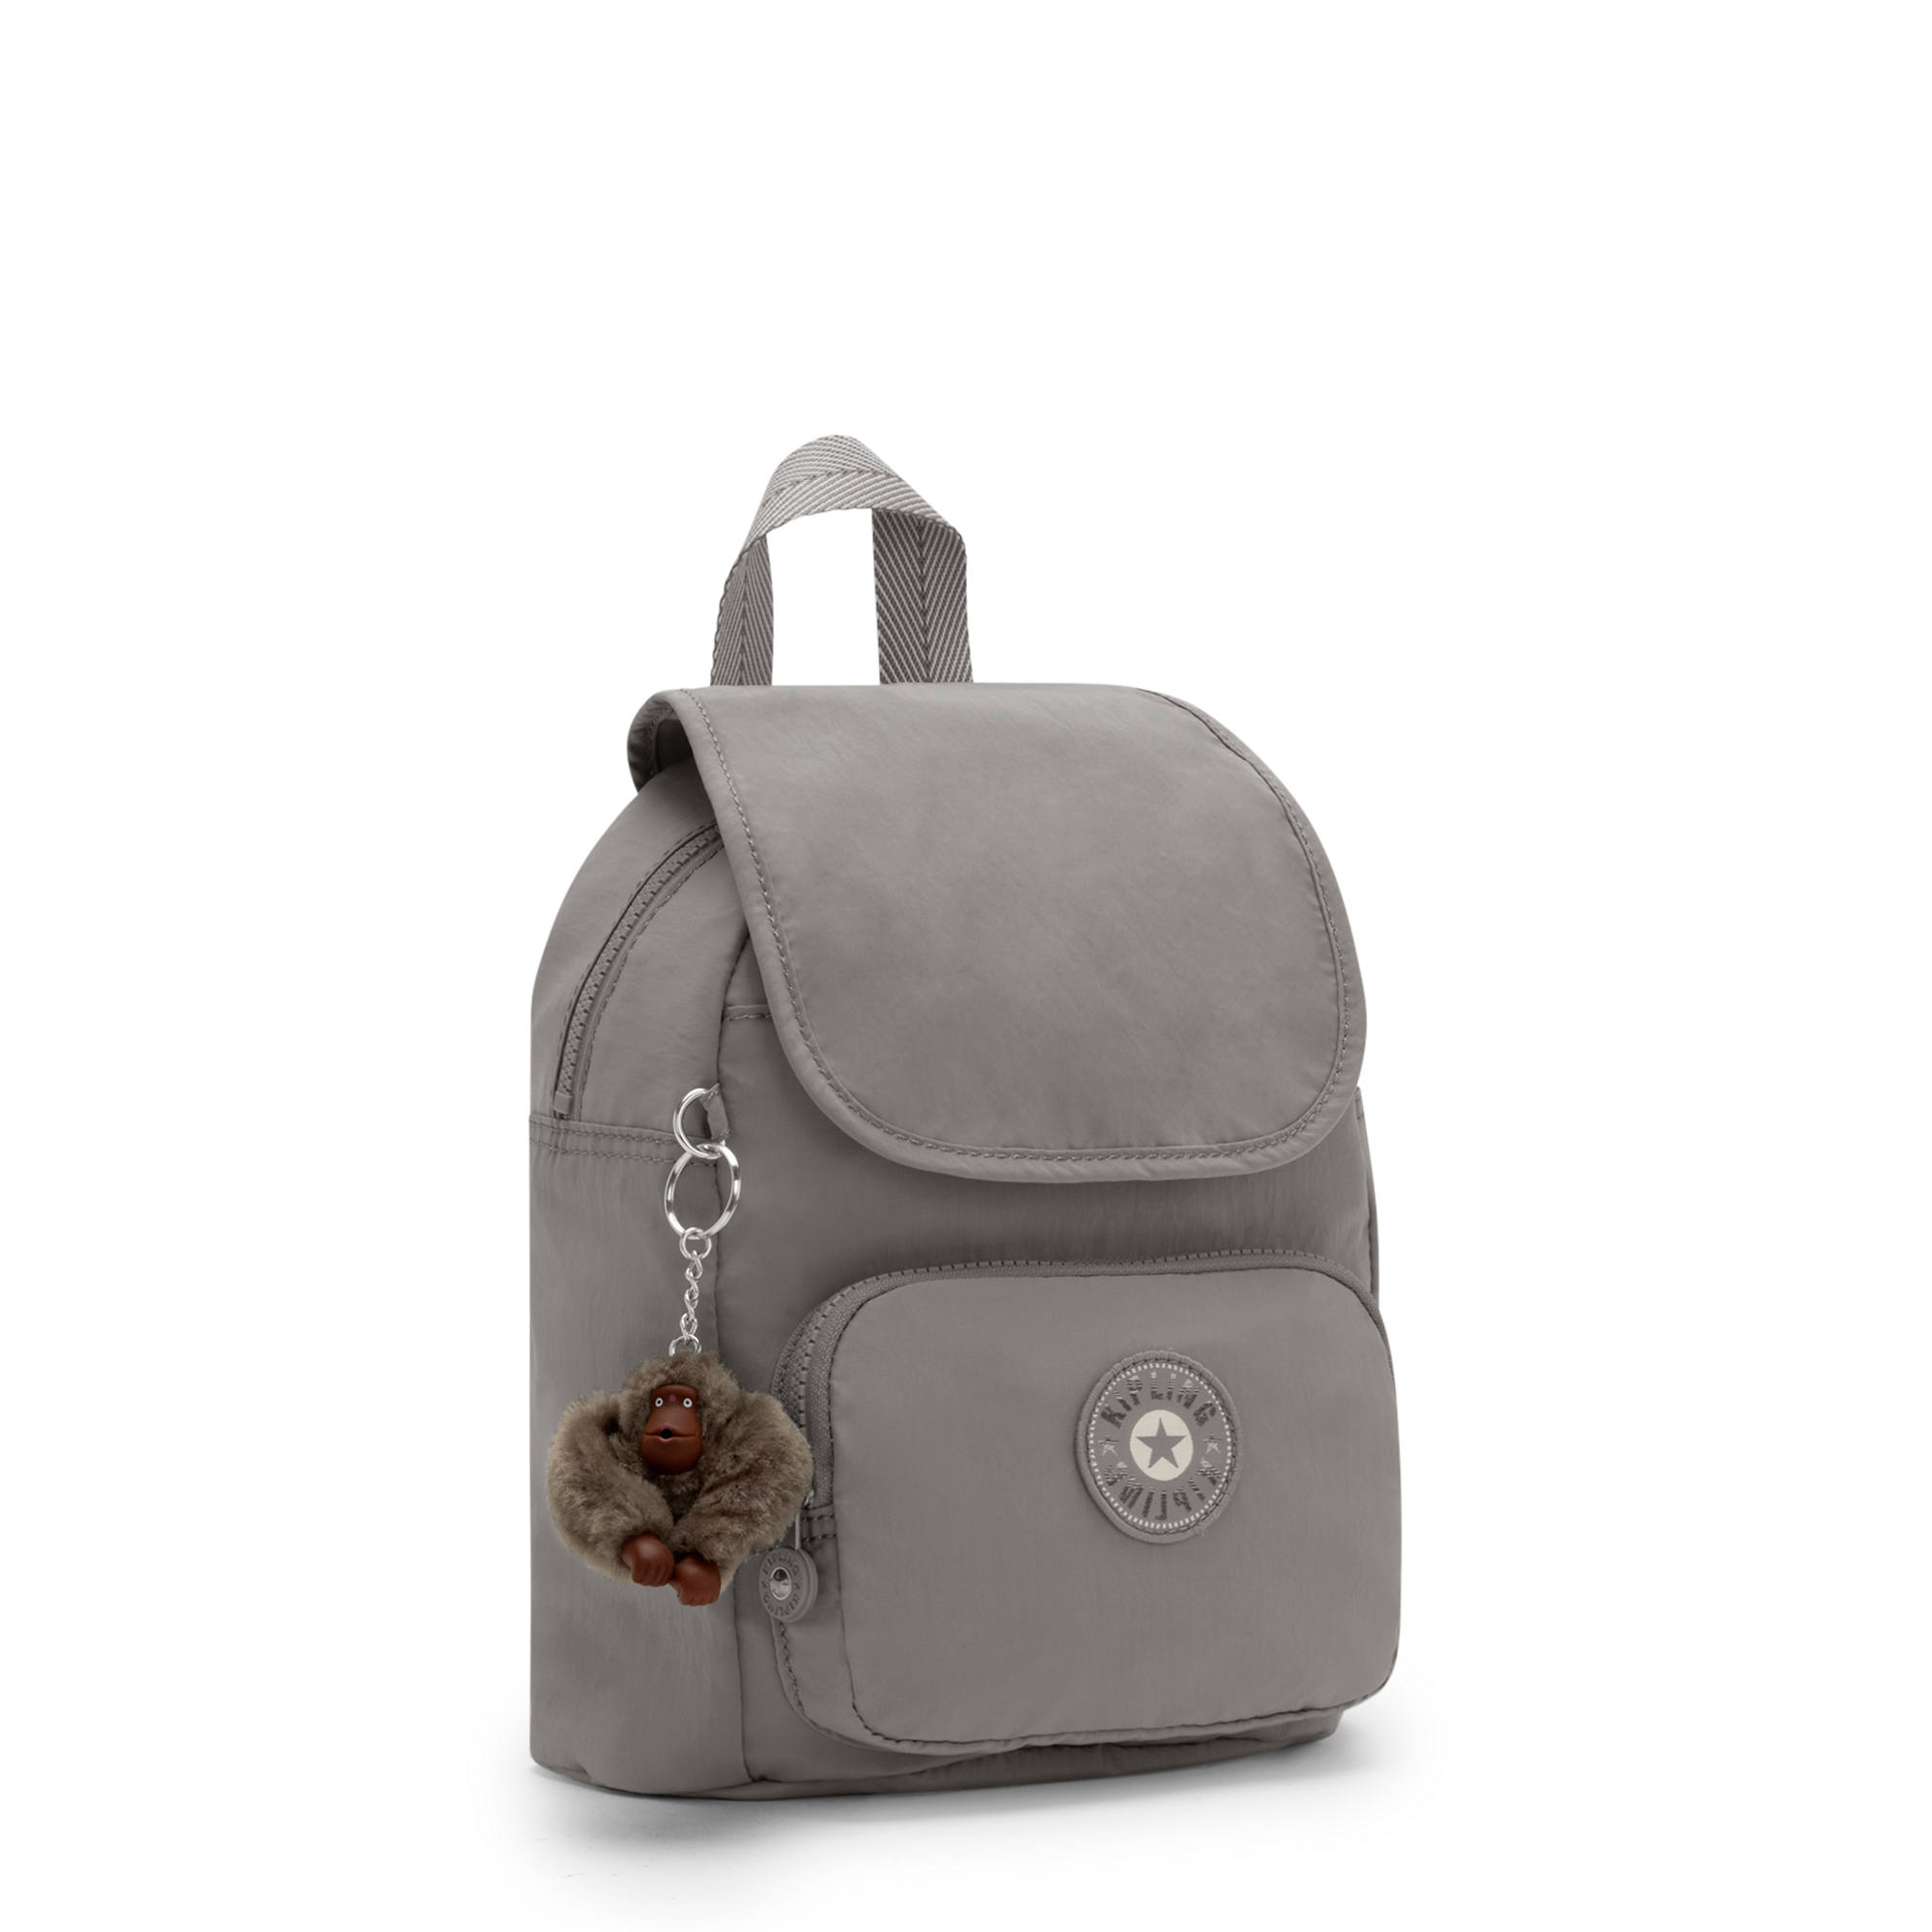 Abnormaal Overleg Geboorteplaats Kipling Marigold Small Backpack | eBay